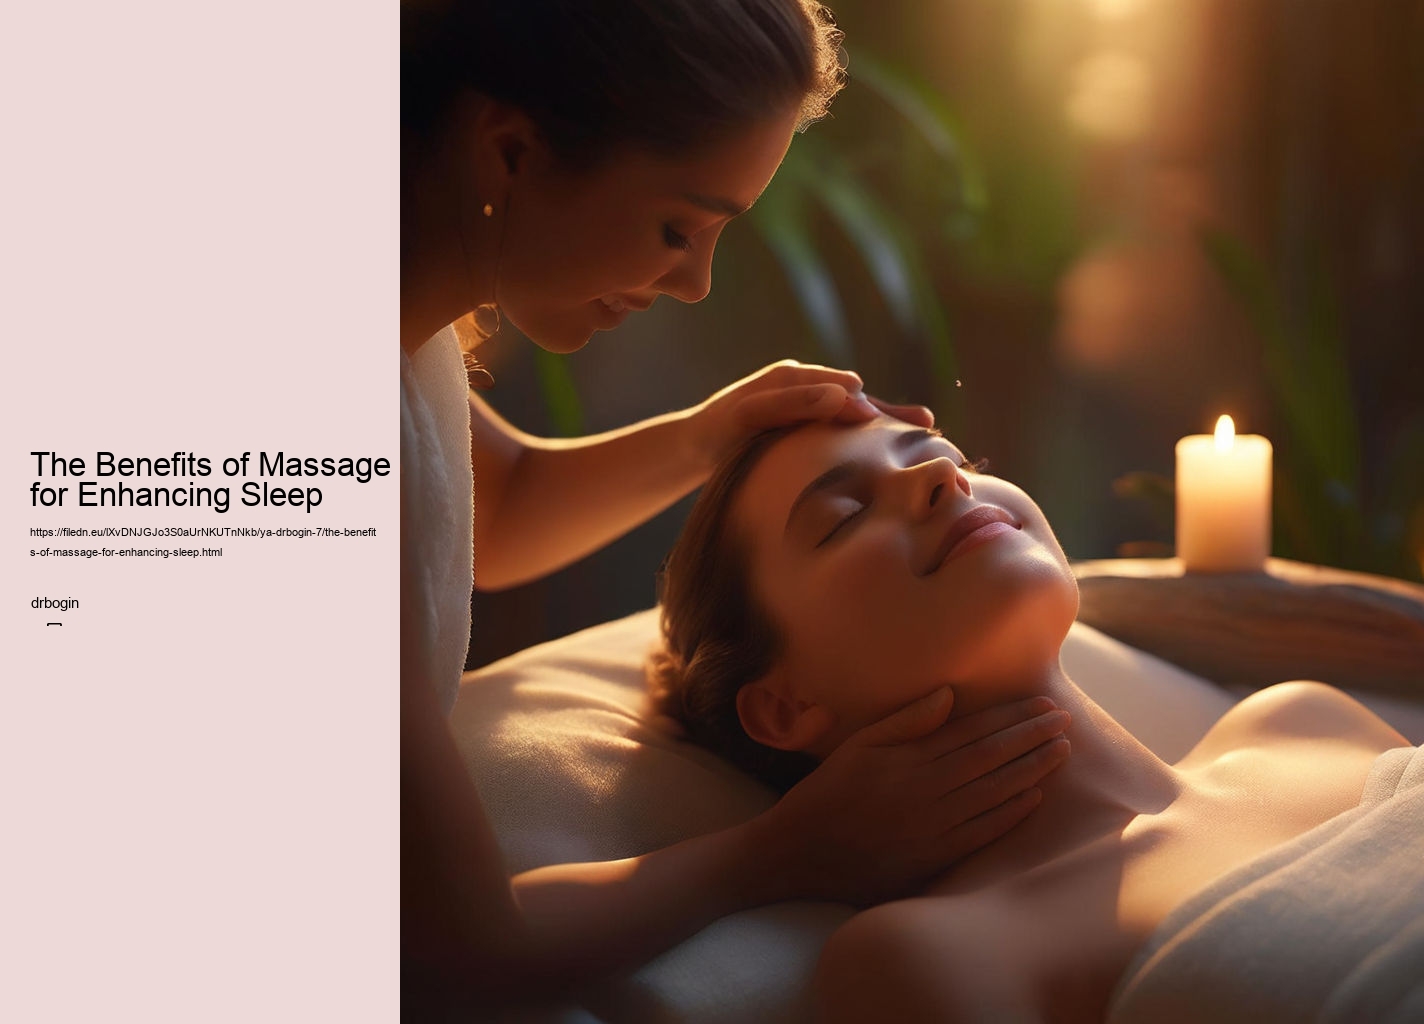 The Benefits of Massage for Enhancing Sleep